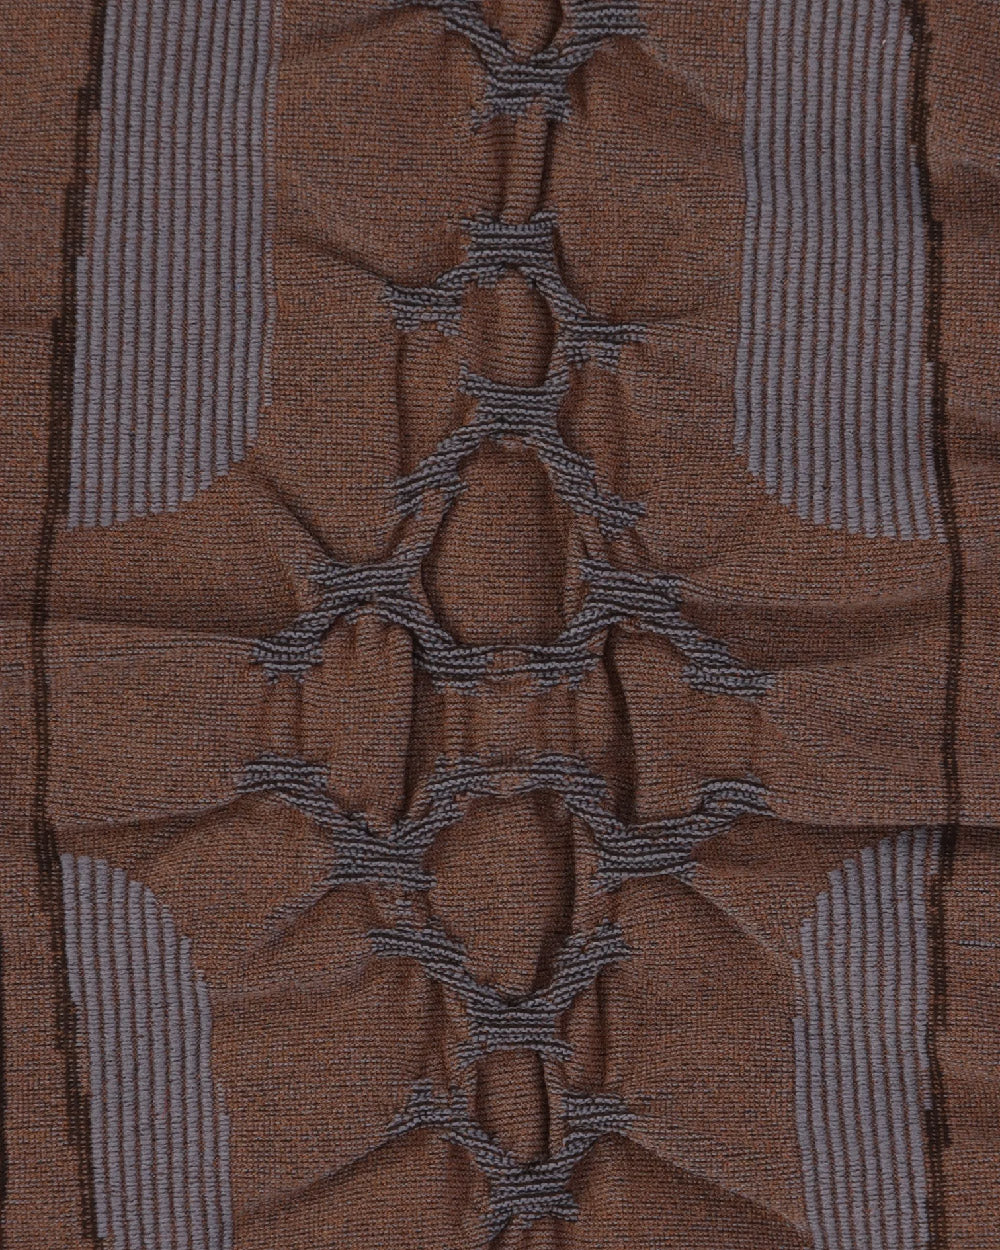 3D Knit Top Brown/Grey